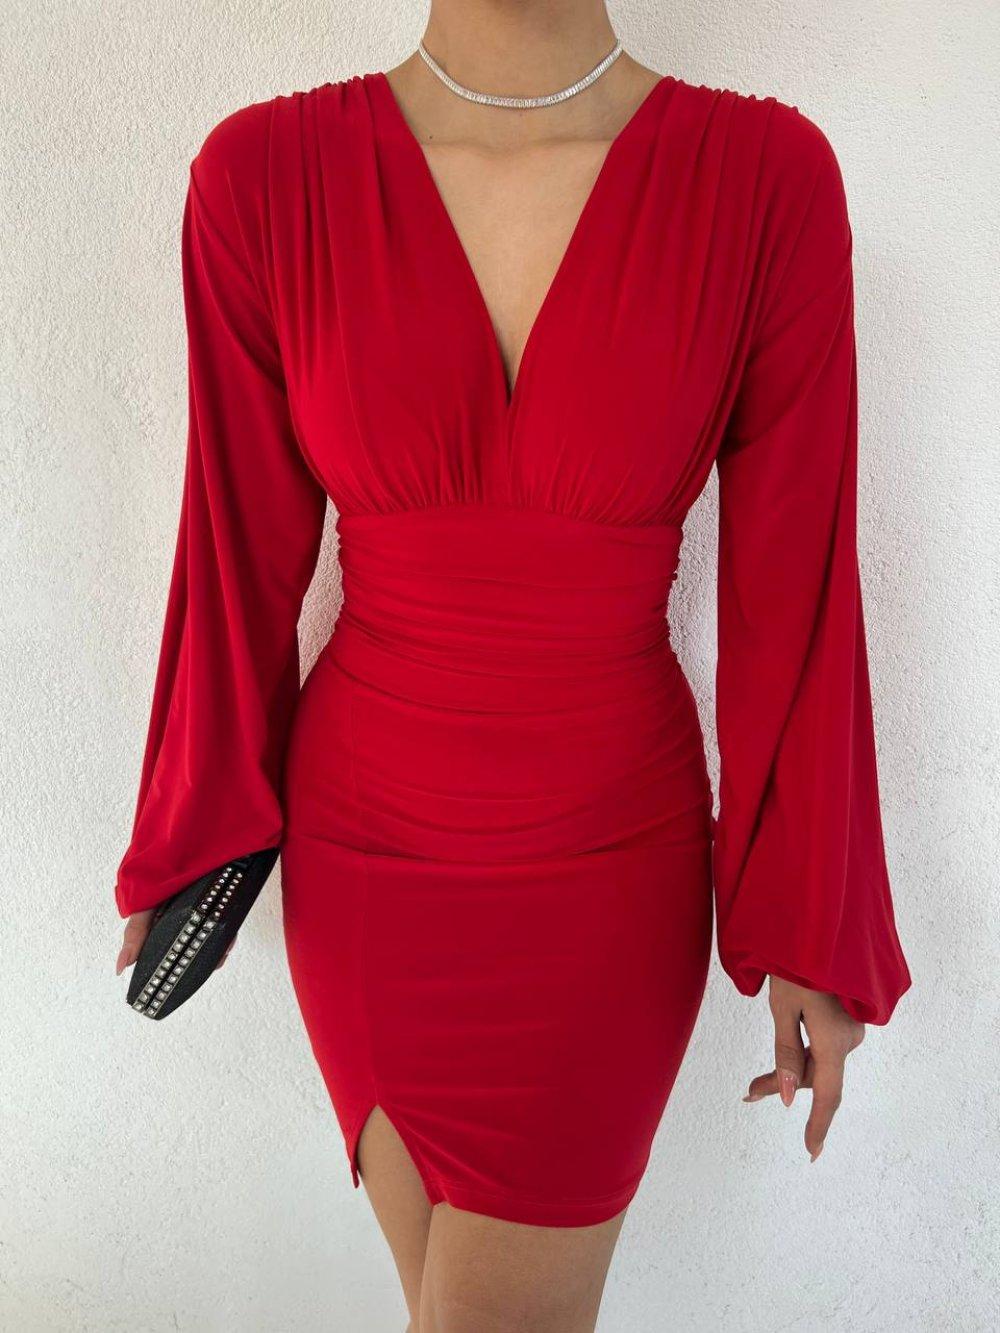 Sandy Göğüs Detay Elbise 10164 Kırmızı